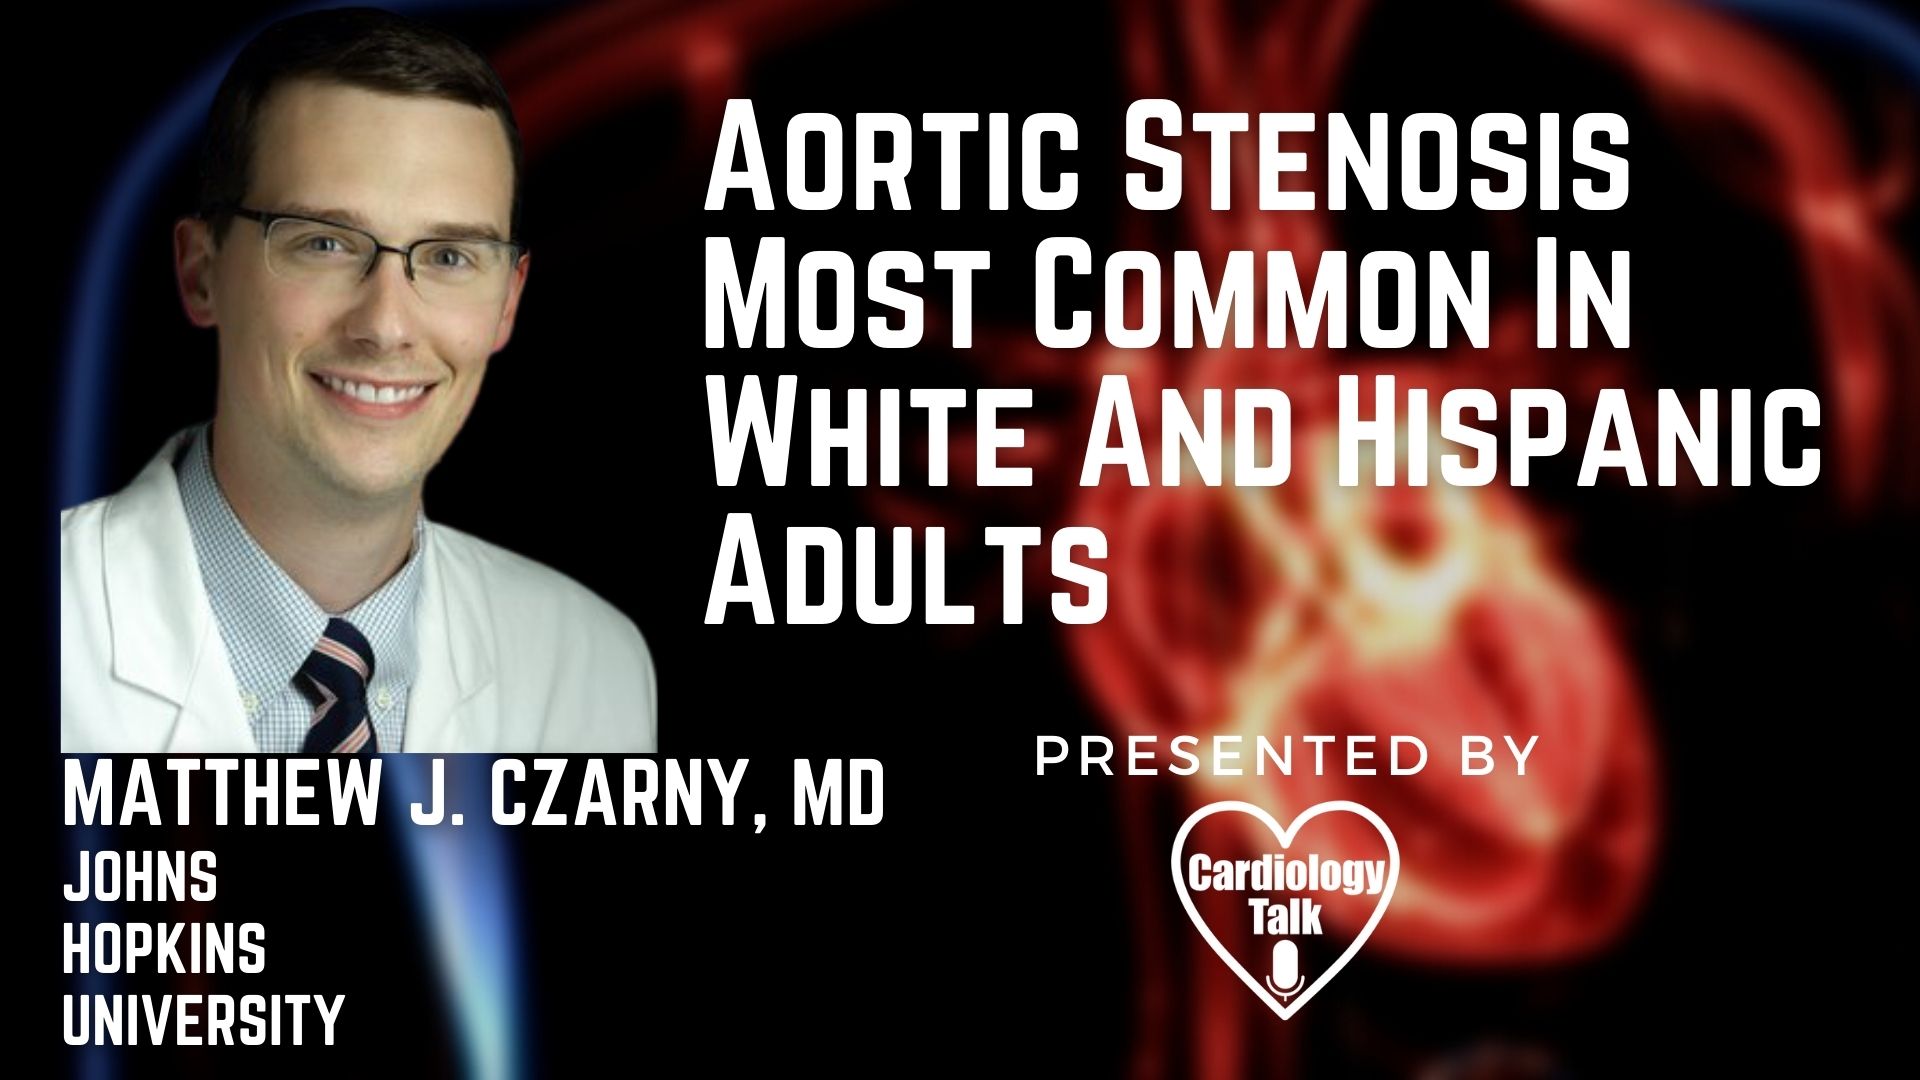 Matthew J. Czarny, MD @MatthewCzarnyMD @hopkinsheart @HopkinsMedicine #AroticStenosis #Cardiology #Research Aortic Stenosis Most Common In White And Hispanic Adults